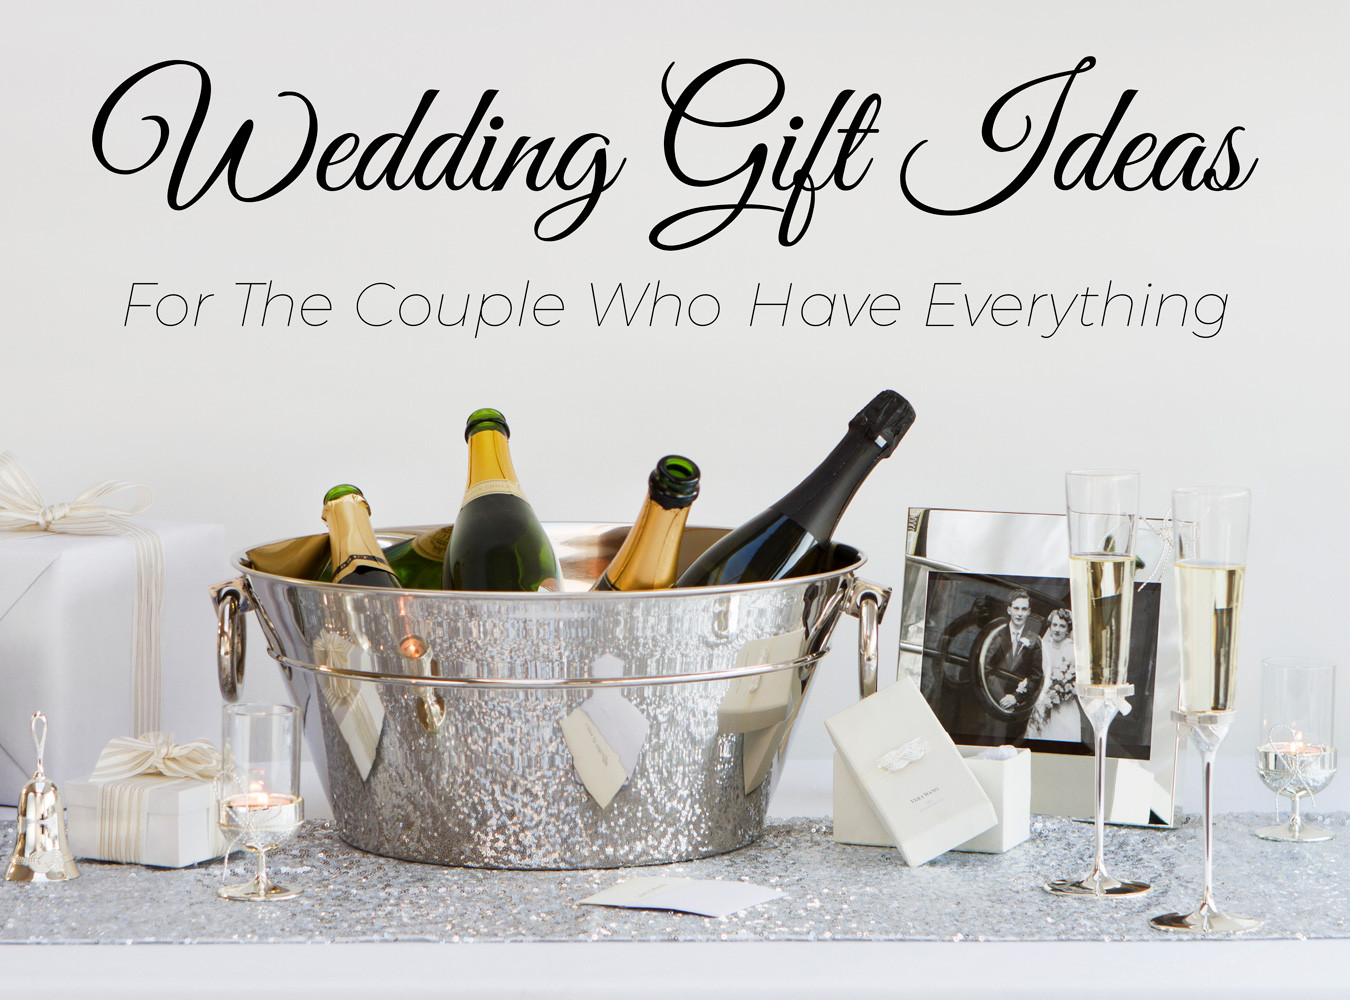 Wedding Gift Ideas Couple Has Everything
 5 Wedding Gift Ideas for the Couple Who Have Everything